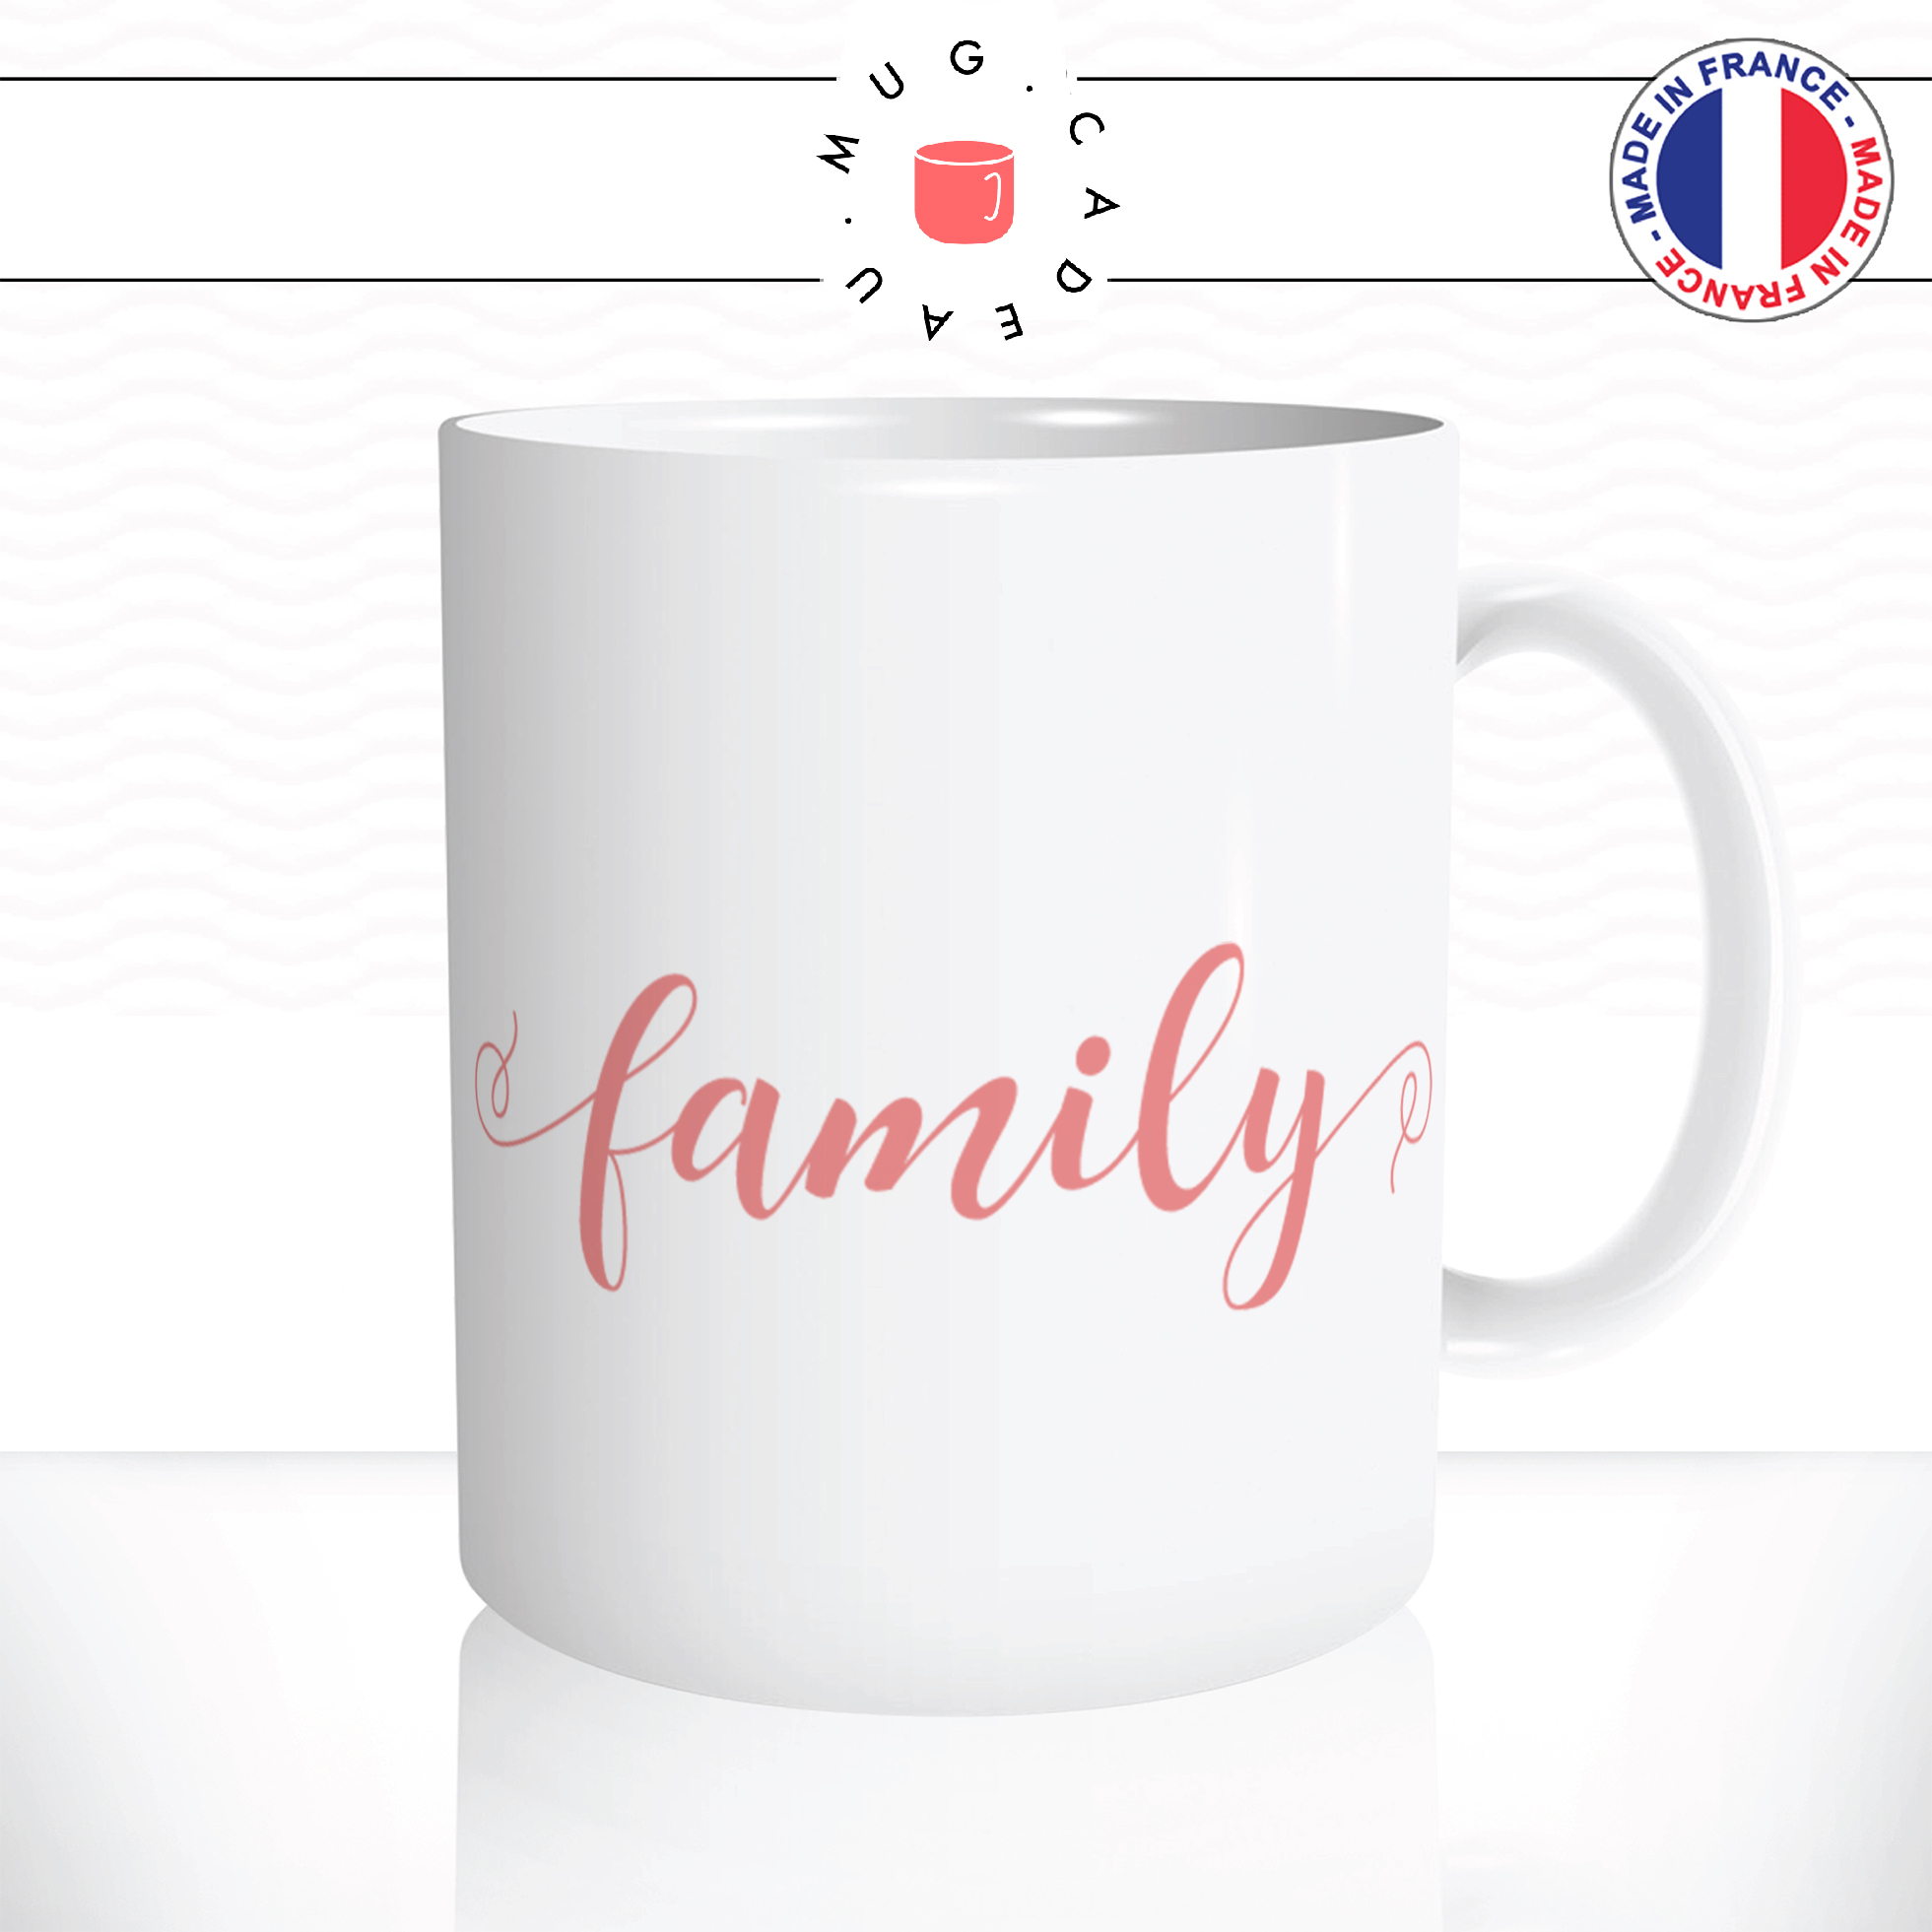 mug-tasse-ref36-citation-heureuse-family-ecriture-rose-cafe-the-mugs-tasses-personnalise-anse-droite